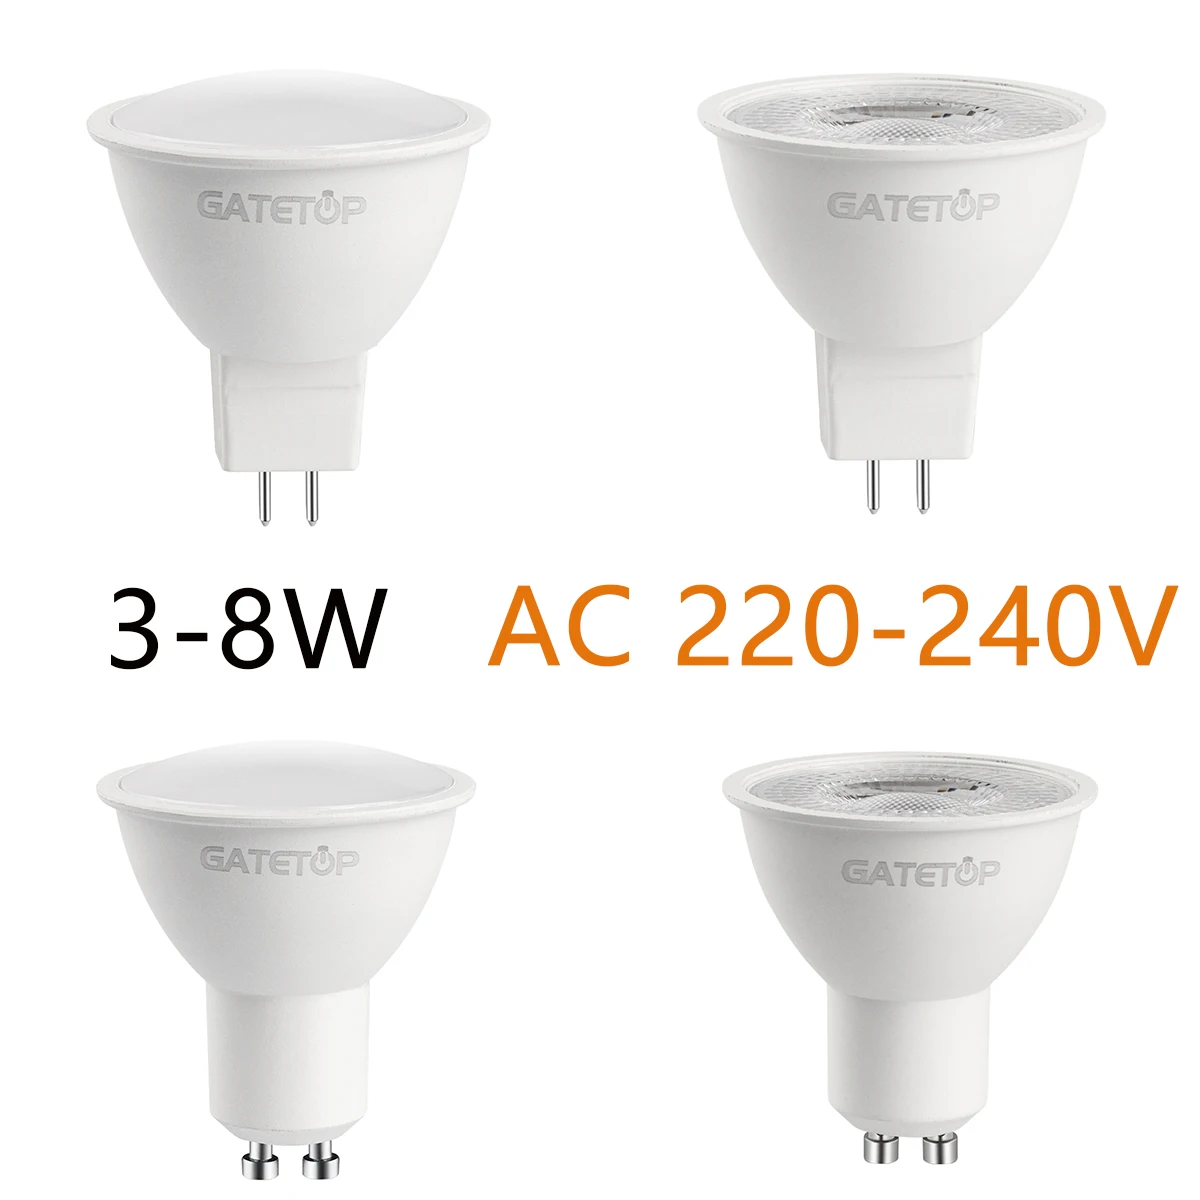 

LED spotlight GU10 GU5.3 AC220V high luminous efficiency, no flicker, warm white light 3W-8W, can replace 20W 50W halogen lamp